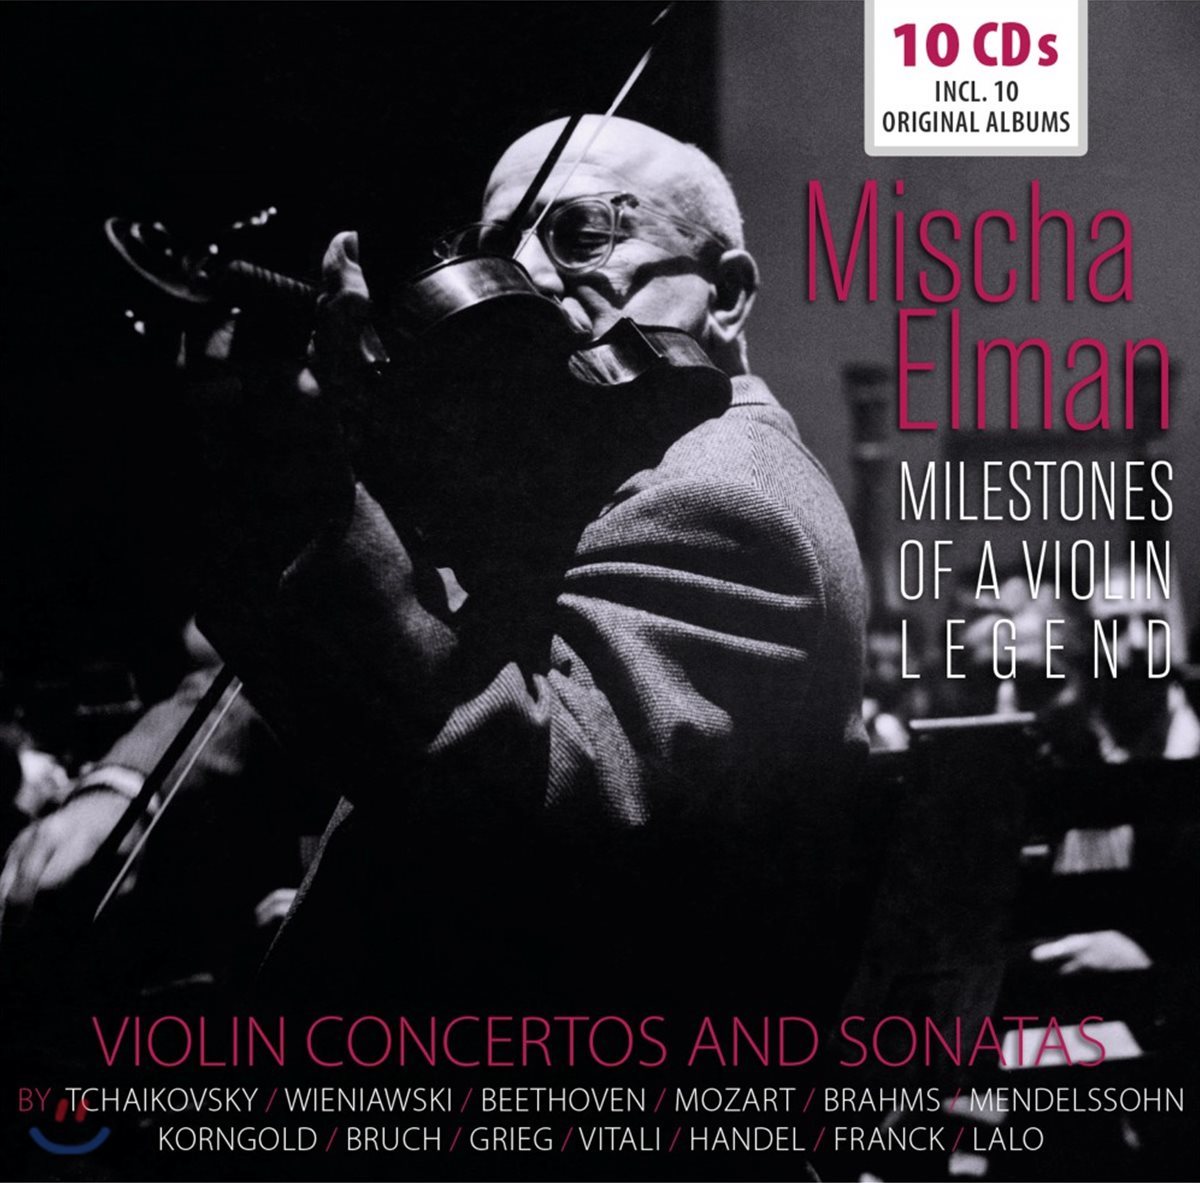 Mischa Elman 미샤 엘만 협주곡, 소나타 명연집 (Mischa Elman - Violin Concertos And Sonatas) [10CD Boxset]